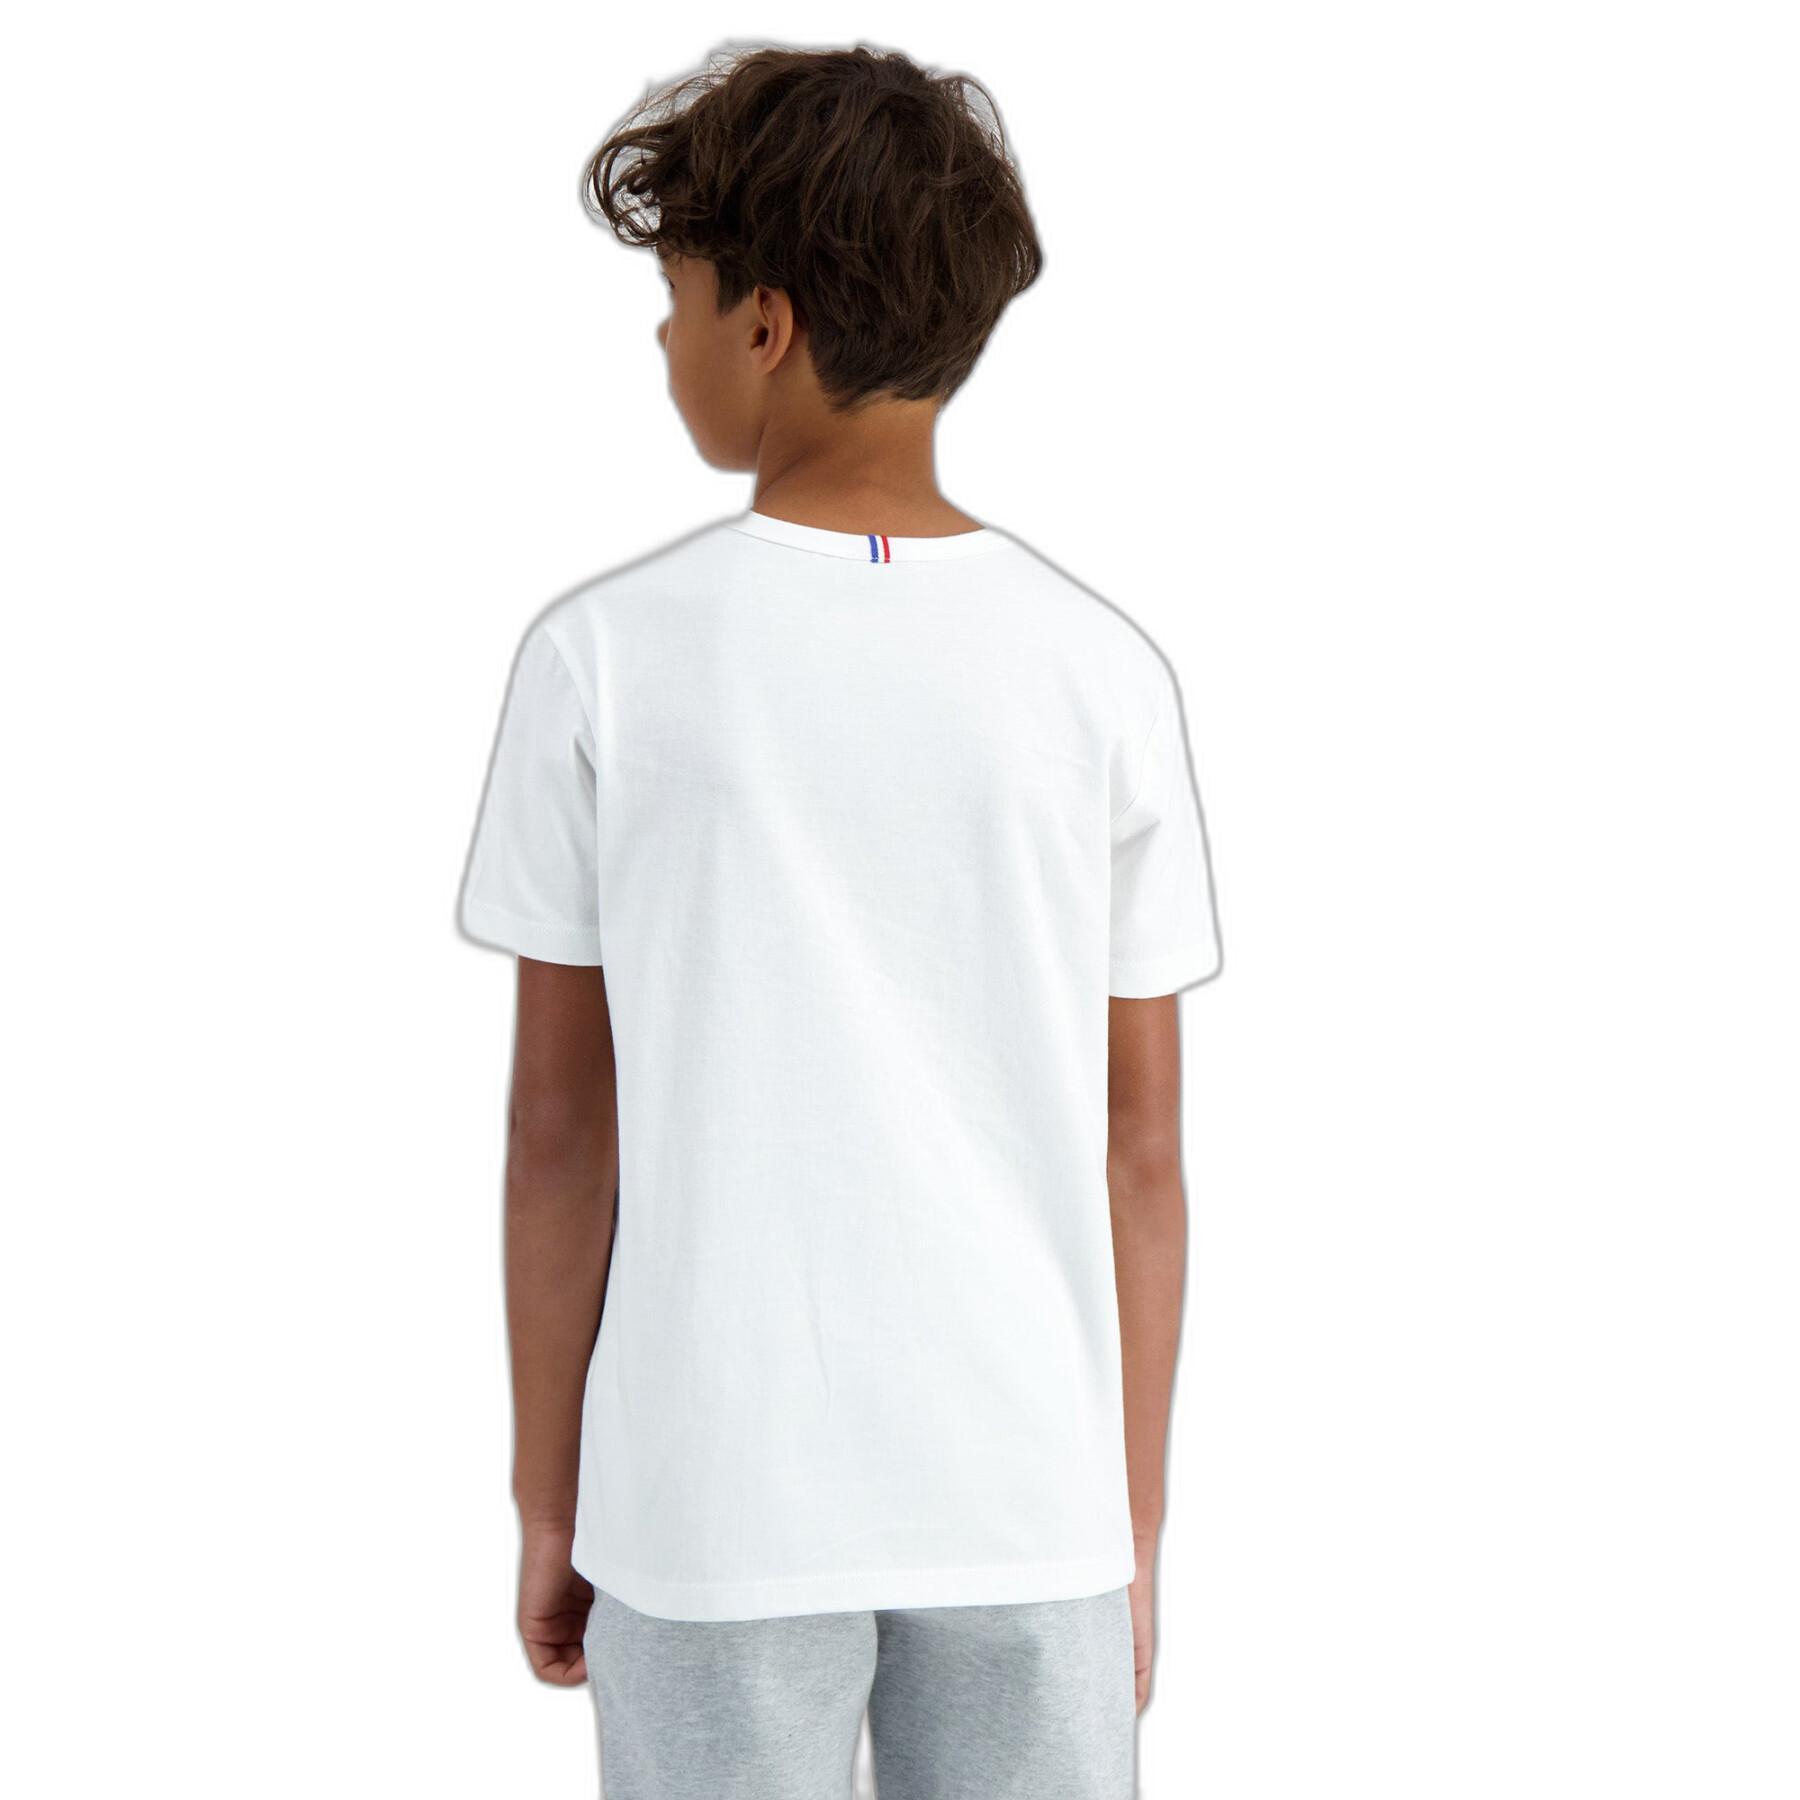 Kinder-T-shirt Le Coq Sportif BAT N°1